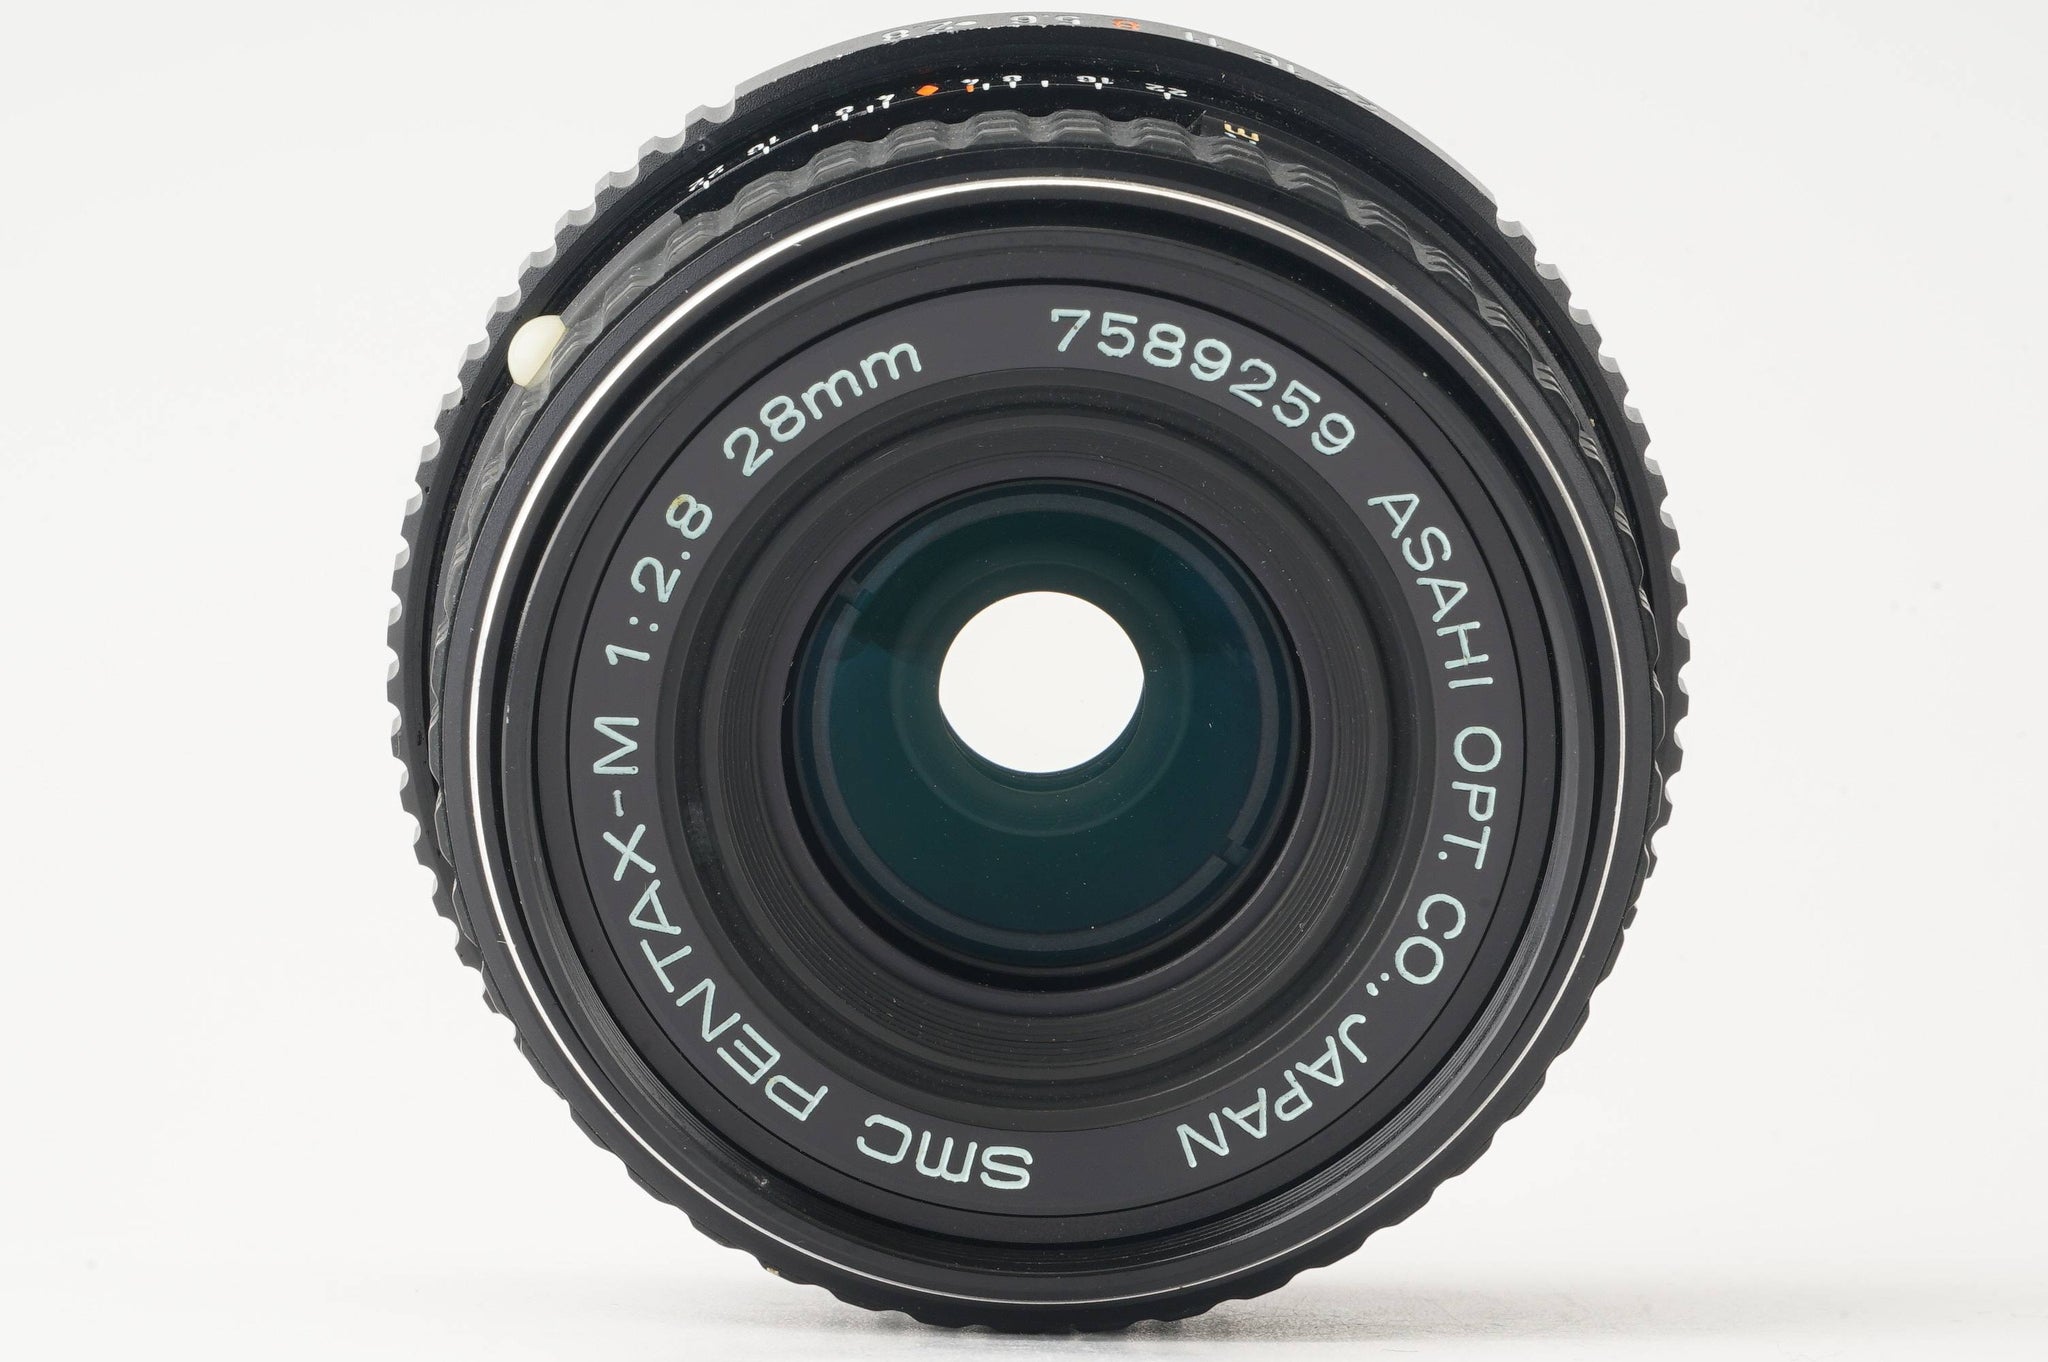 kマウント smc pentax-m 28mm f2.8 - カメラ